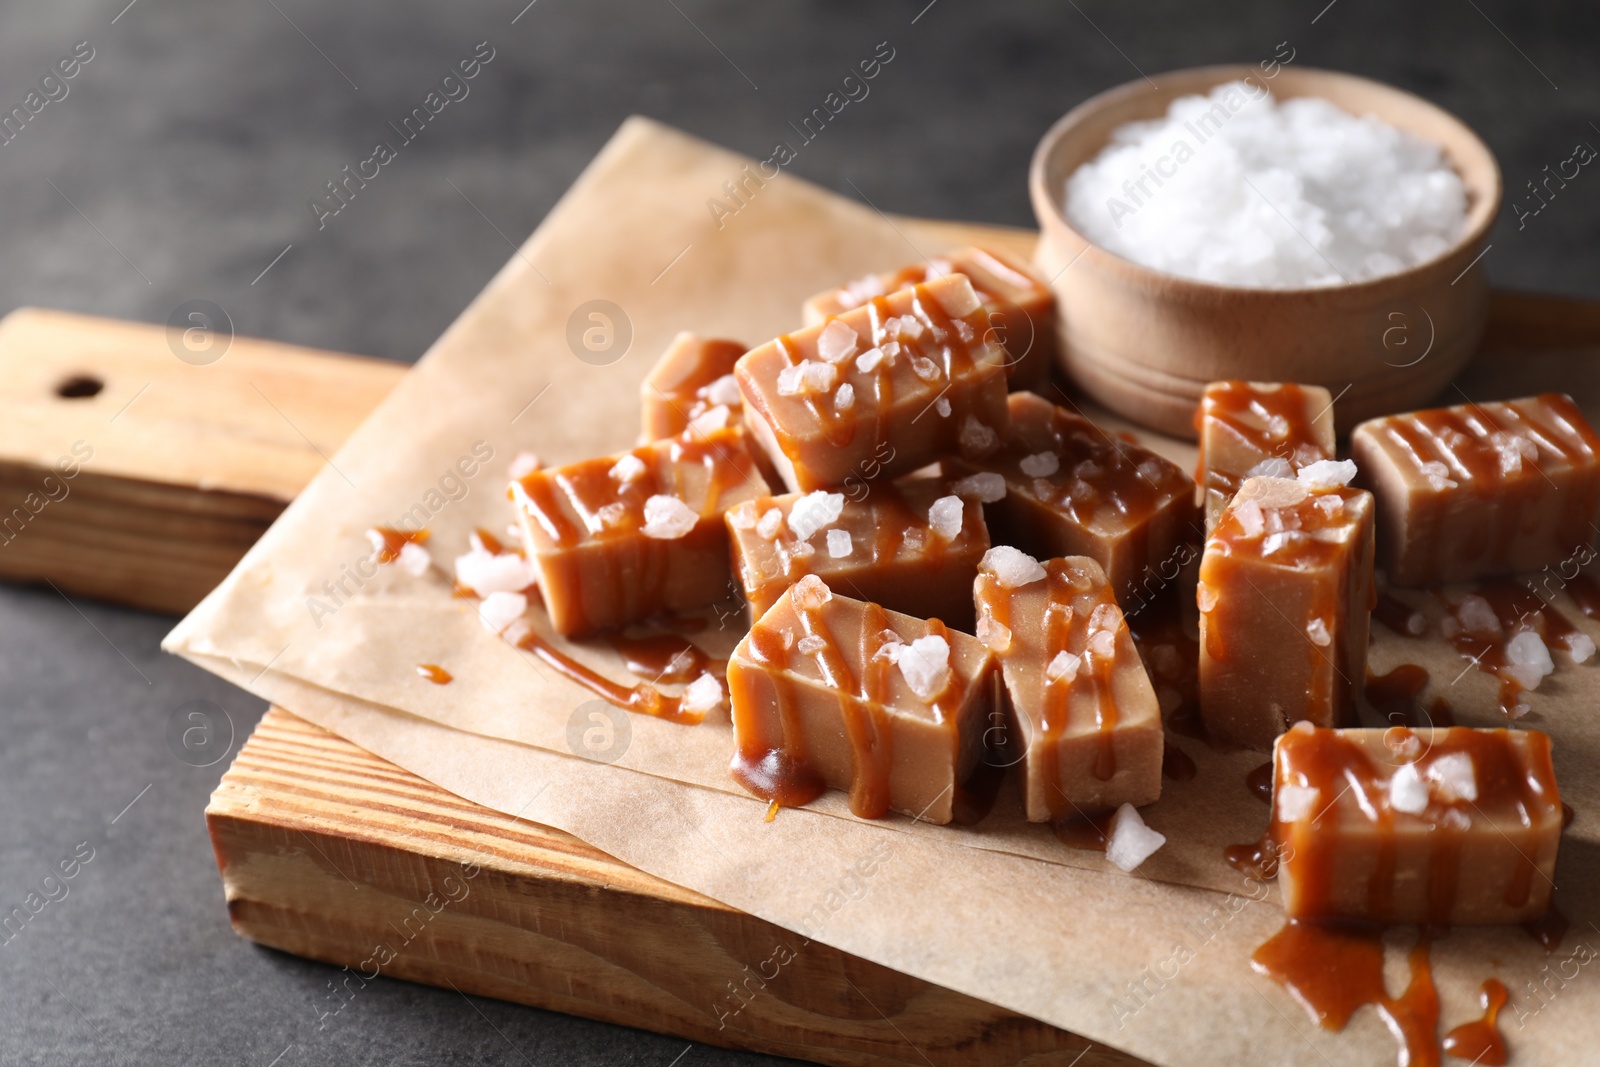 Photo of Tasty candies, caramel sauce and salt on grey table, closeup